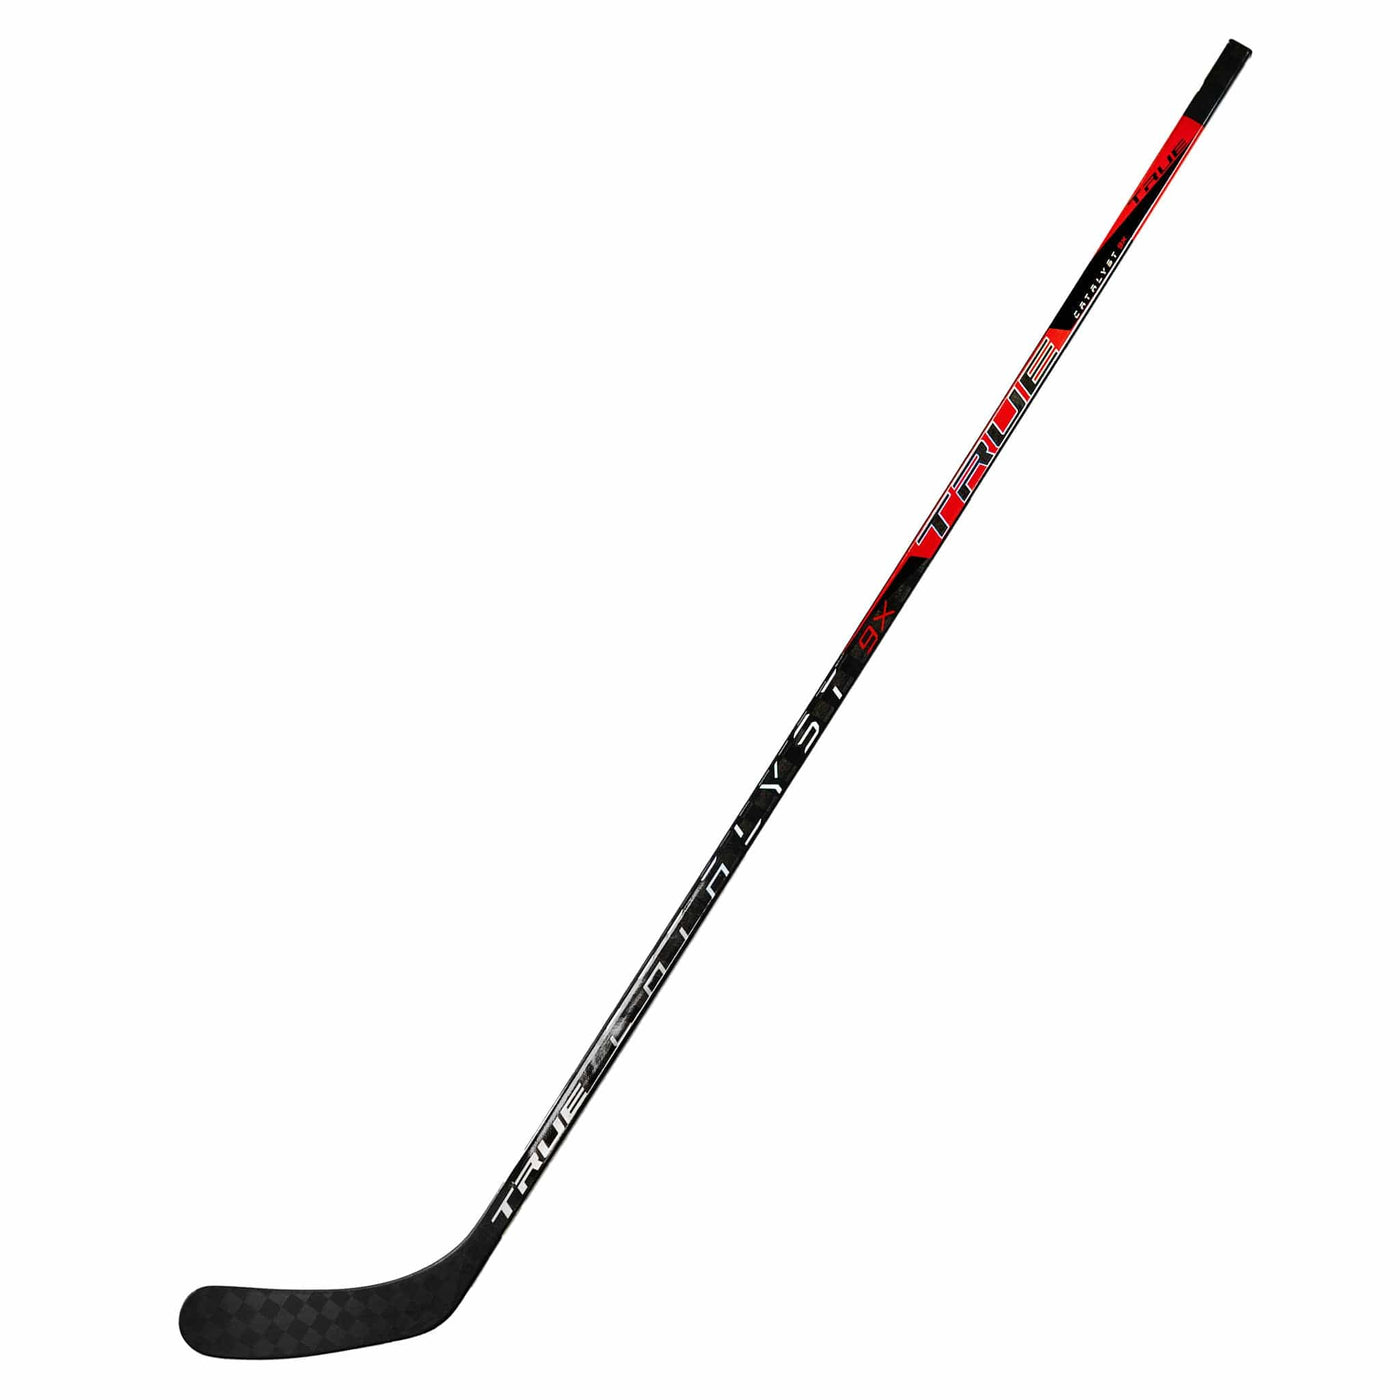 TRUE Catalyst 9X Pro Stock Senior Hockey Stick - Drake Batherson - The Hockey Shop Source For Sports